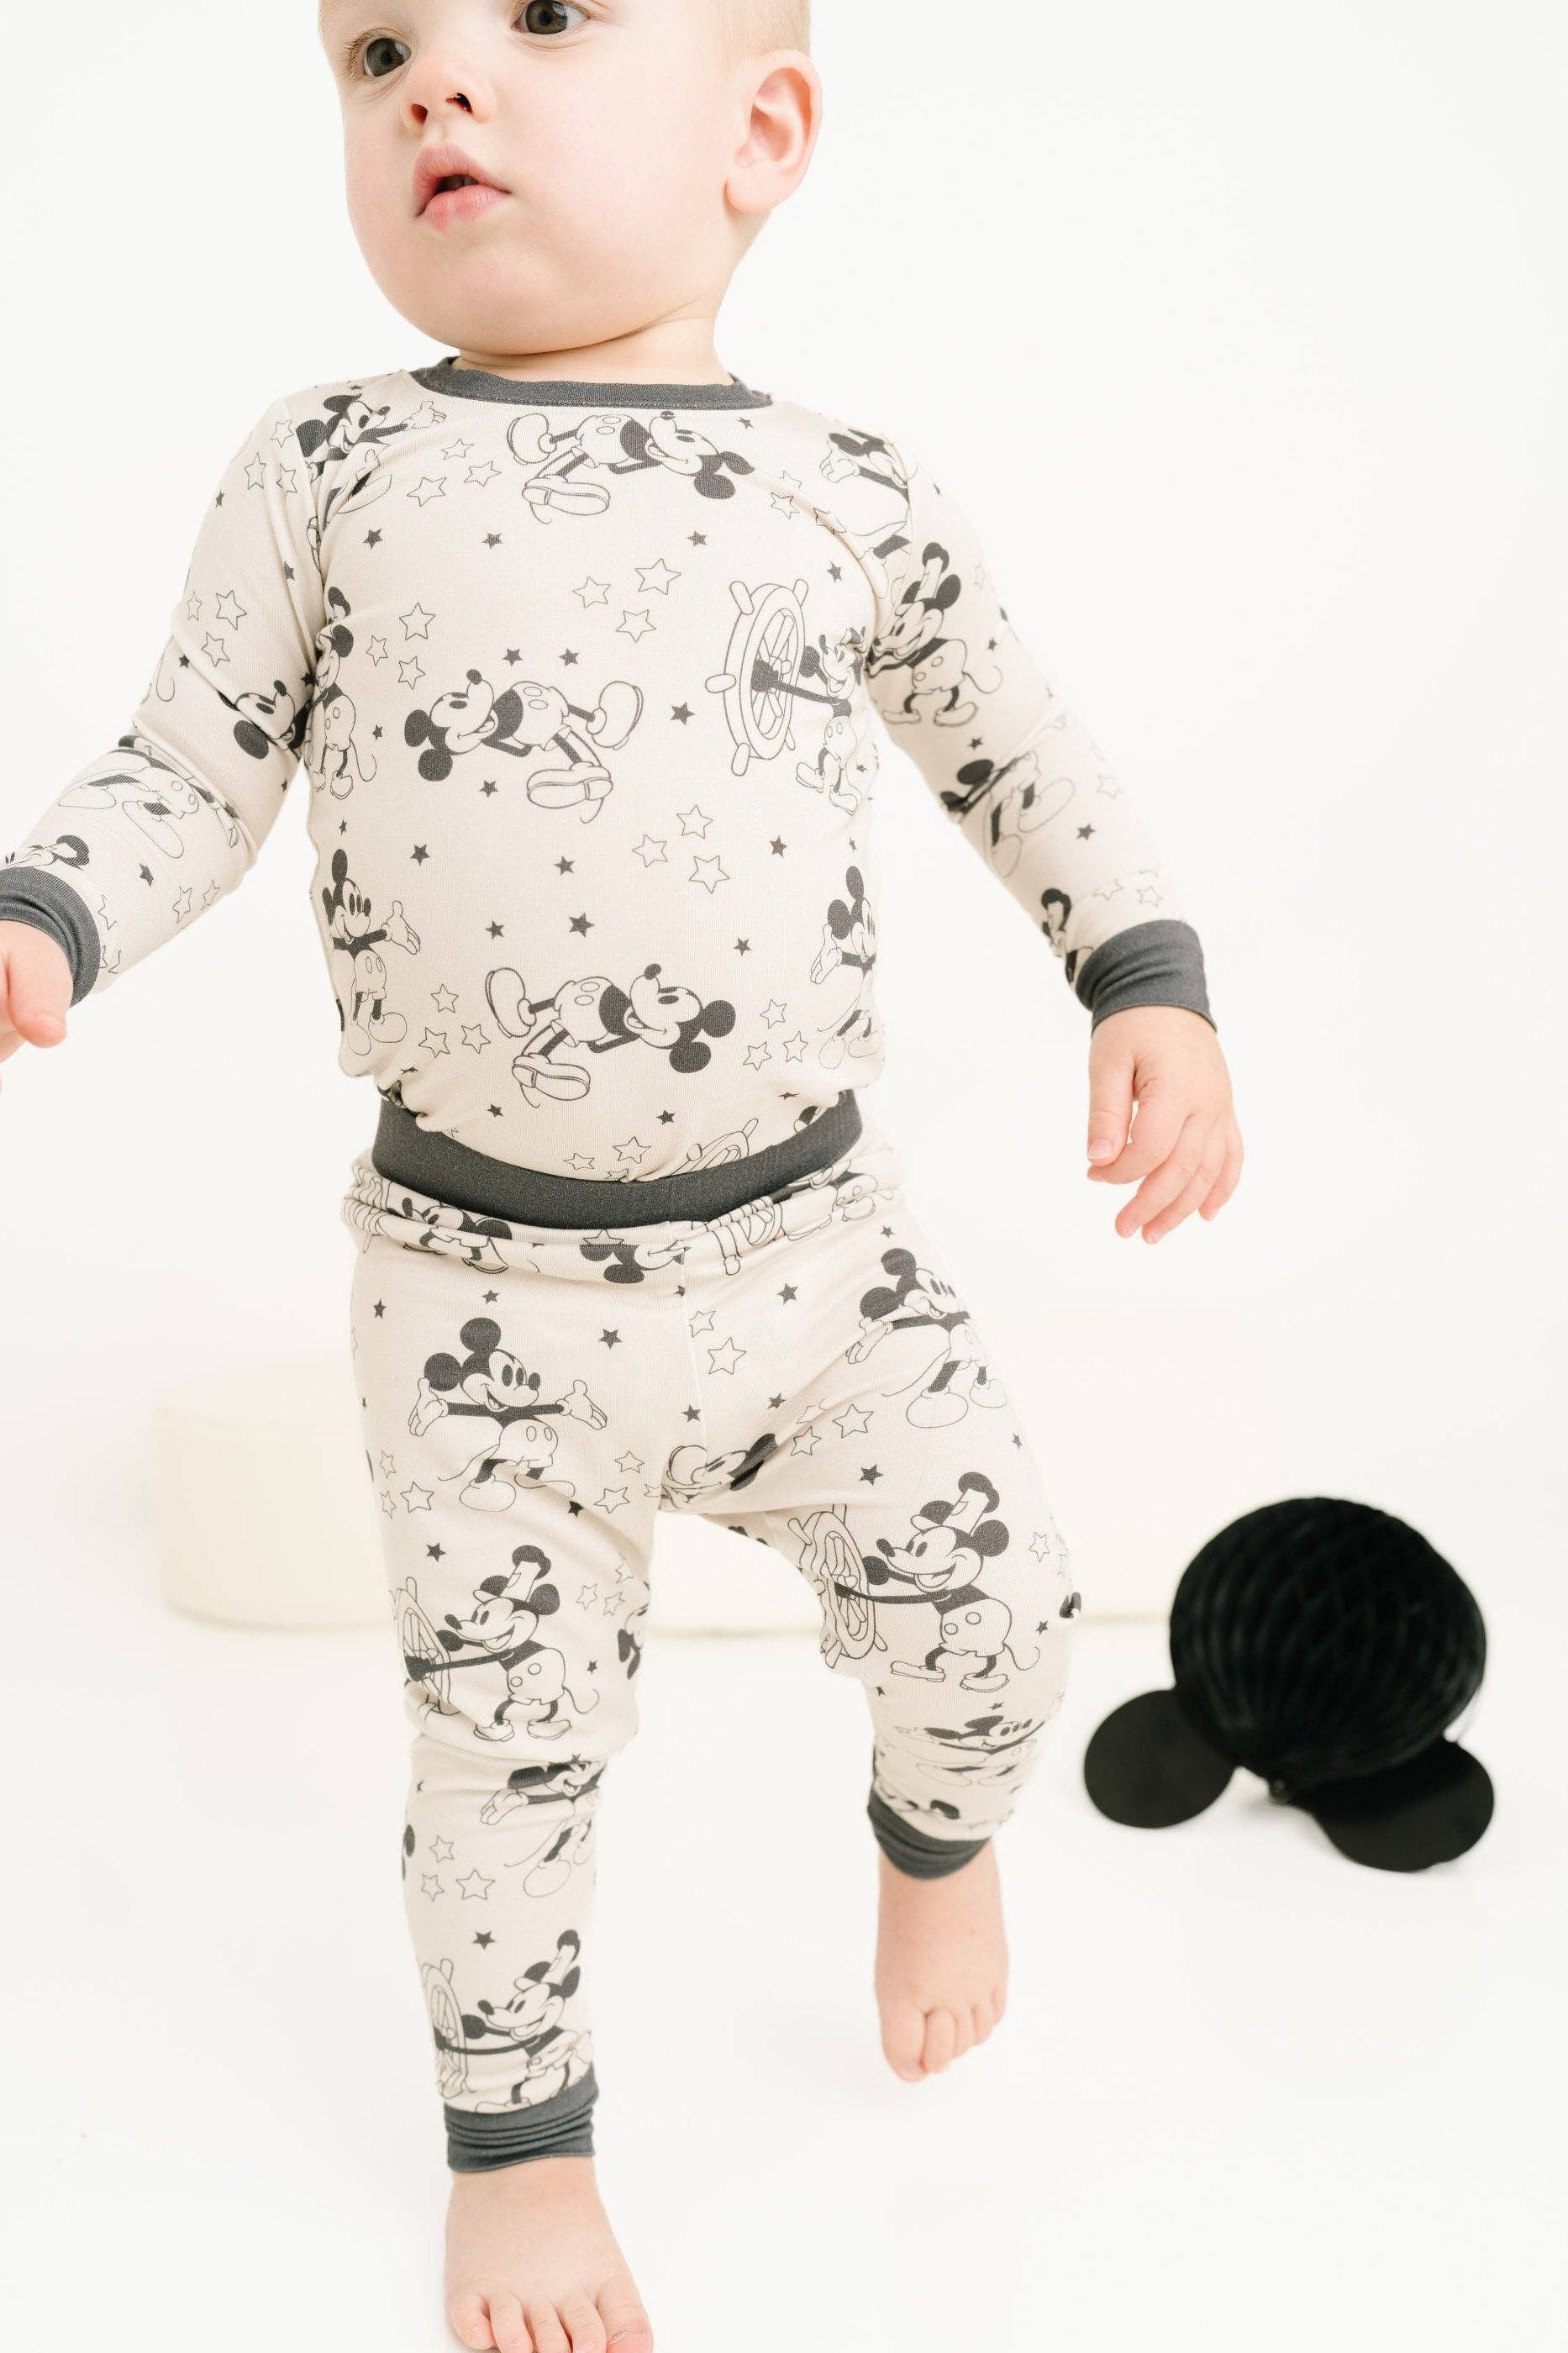 Disney Princess Toddler Girl Letter & Character Print Sweatpants Only $8.99  PatPat US Mobile